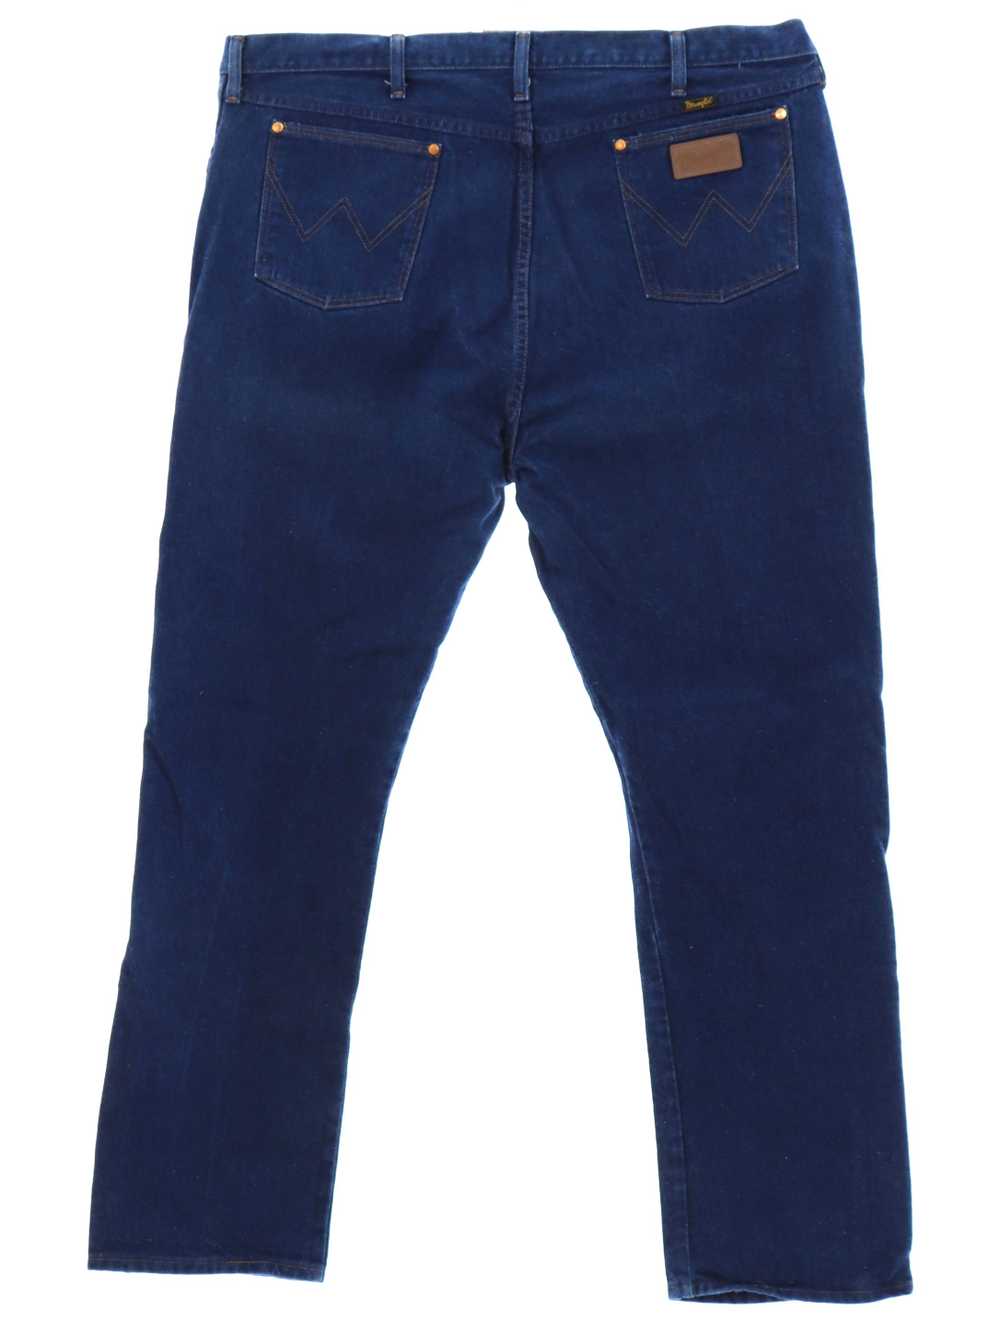 1990's 1995) Mens Wrangler Denim Jeans Pants - image 3